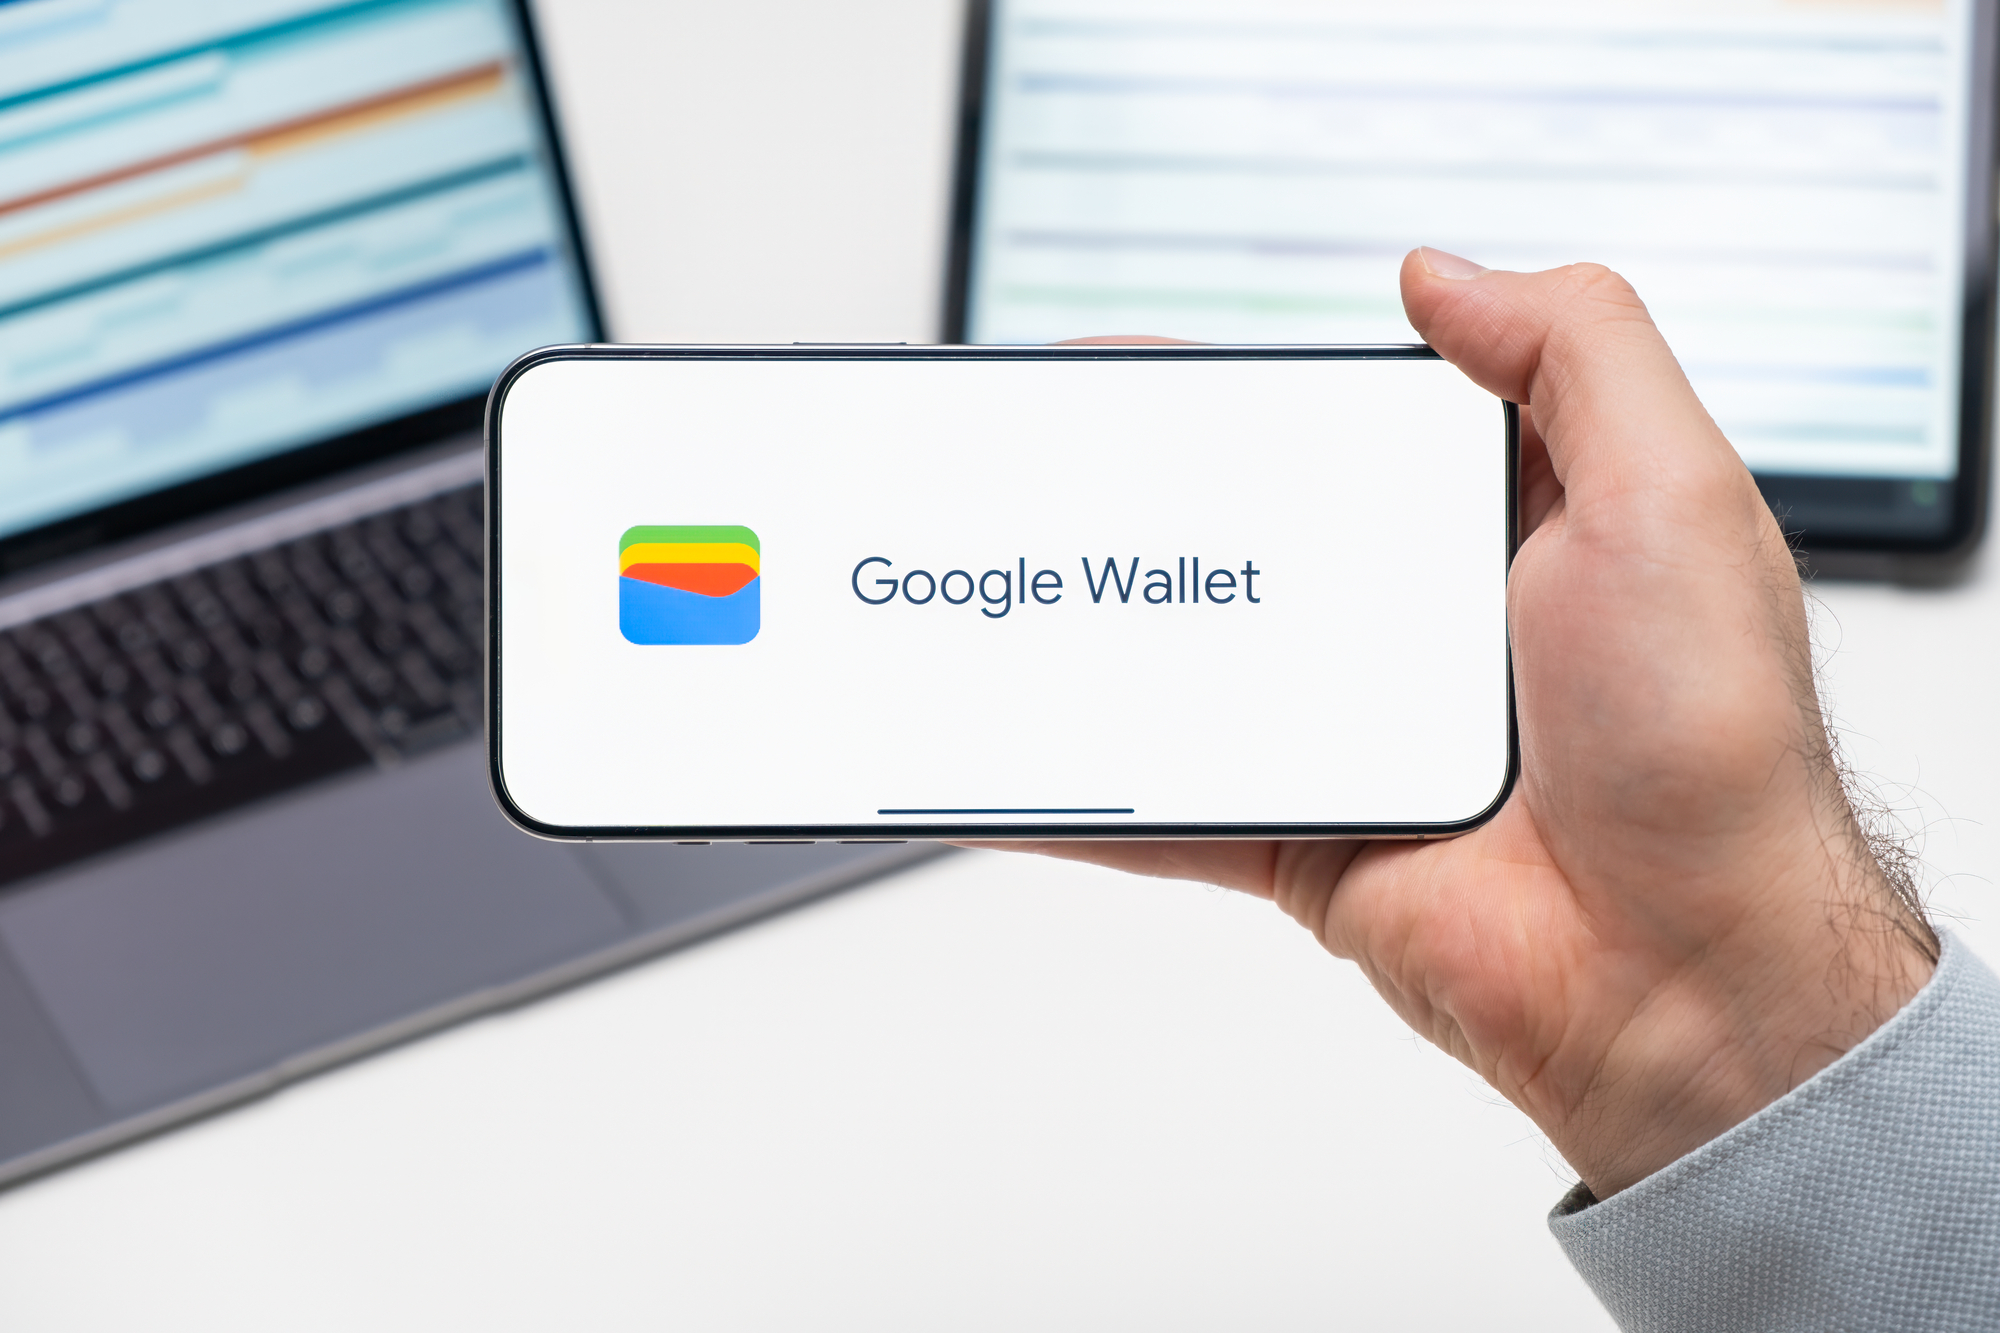 Google Wallet app on mobile phone screen